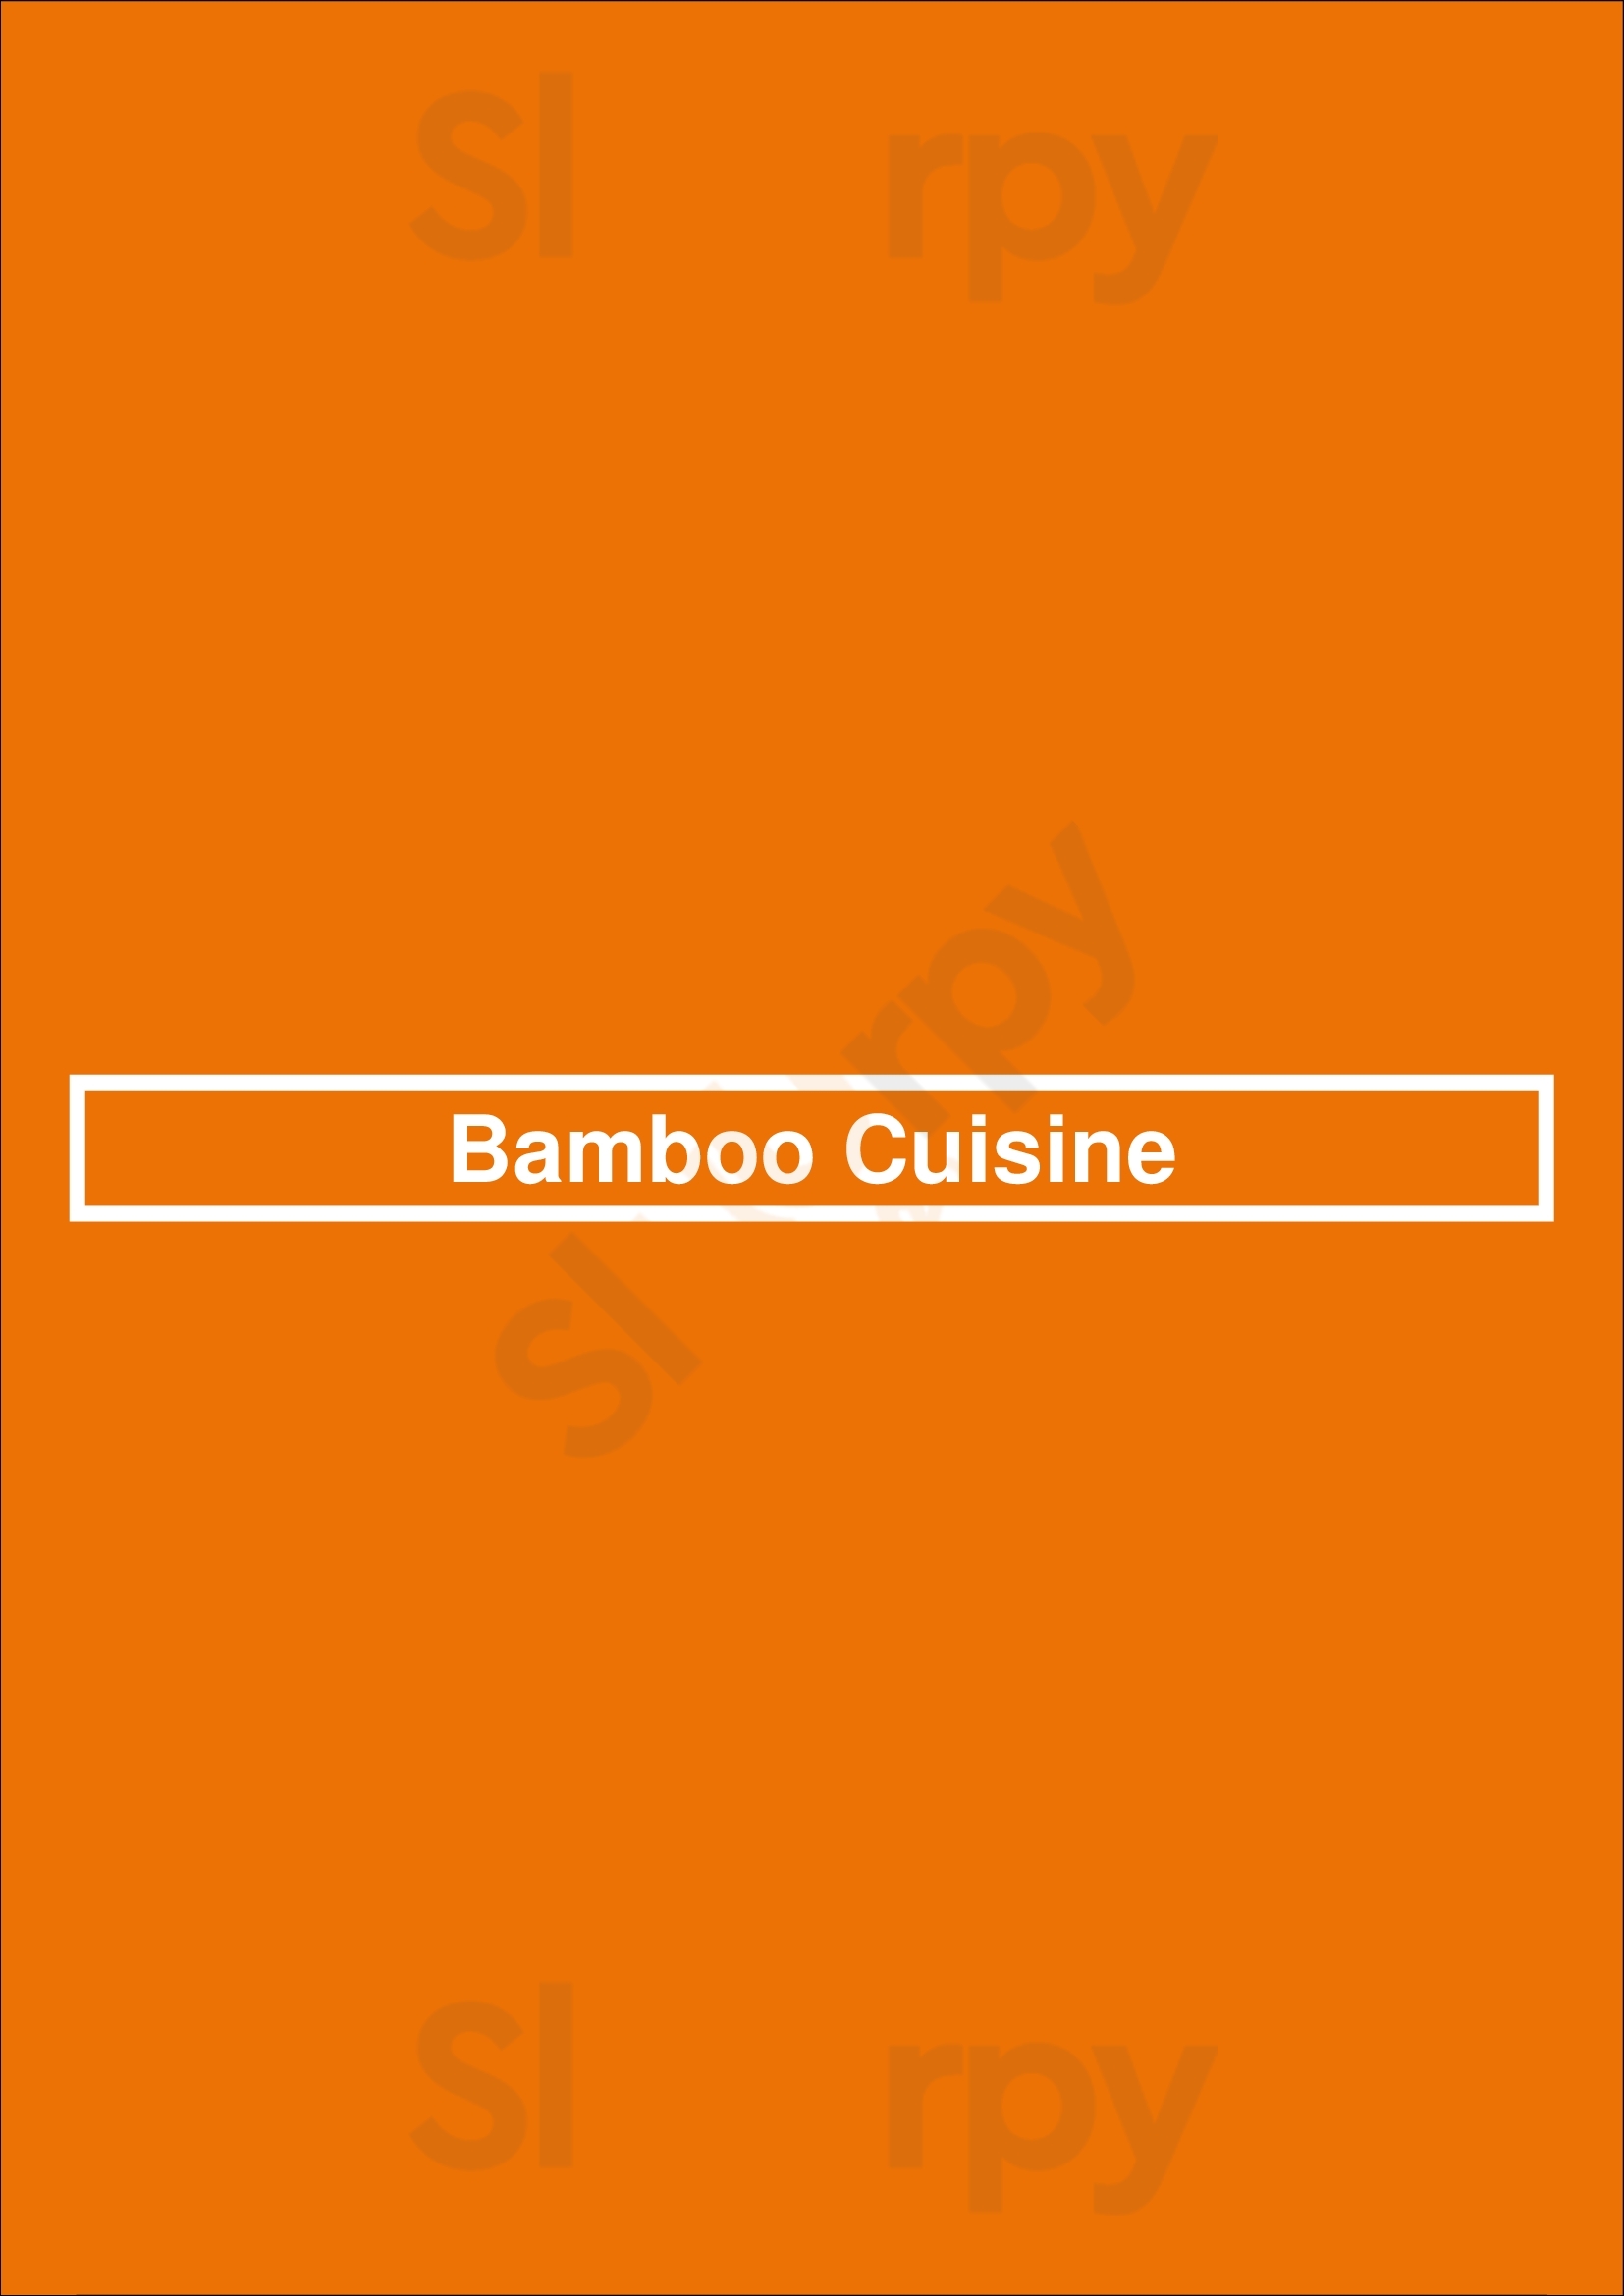 Bamboo Cuisine Los Angeles Menu - 1